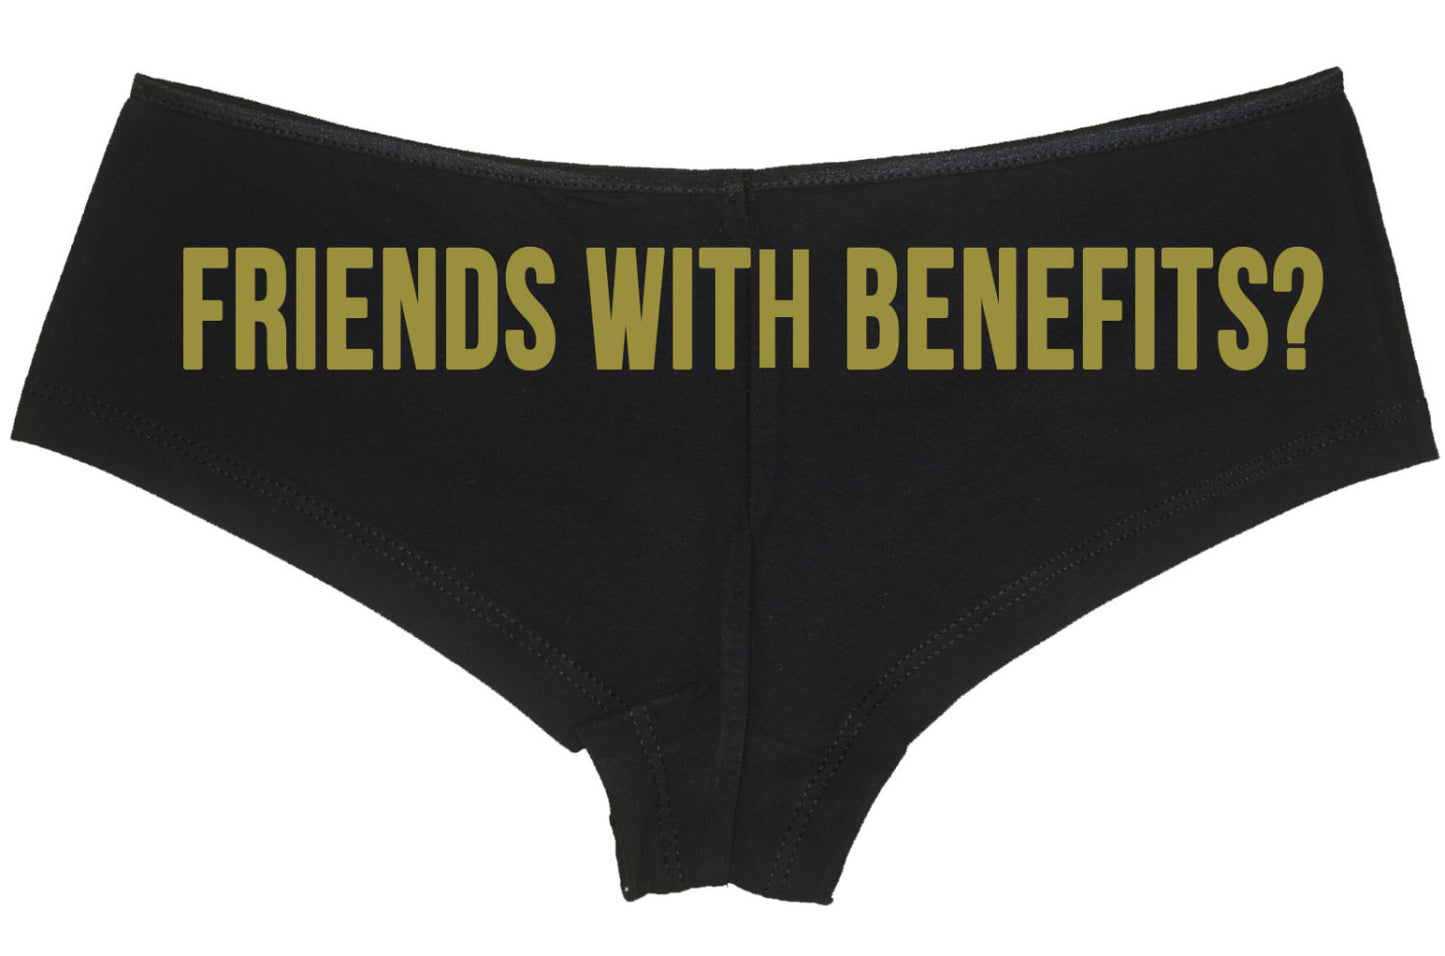 FRIENDS WITH BENEFITS?  - BLACK BOYSHORTS